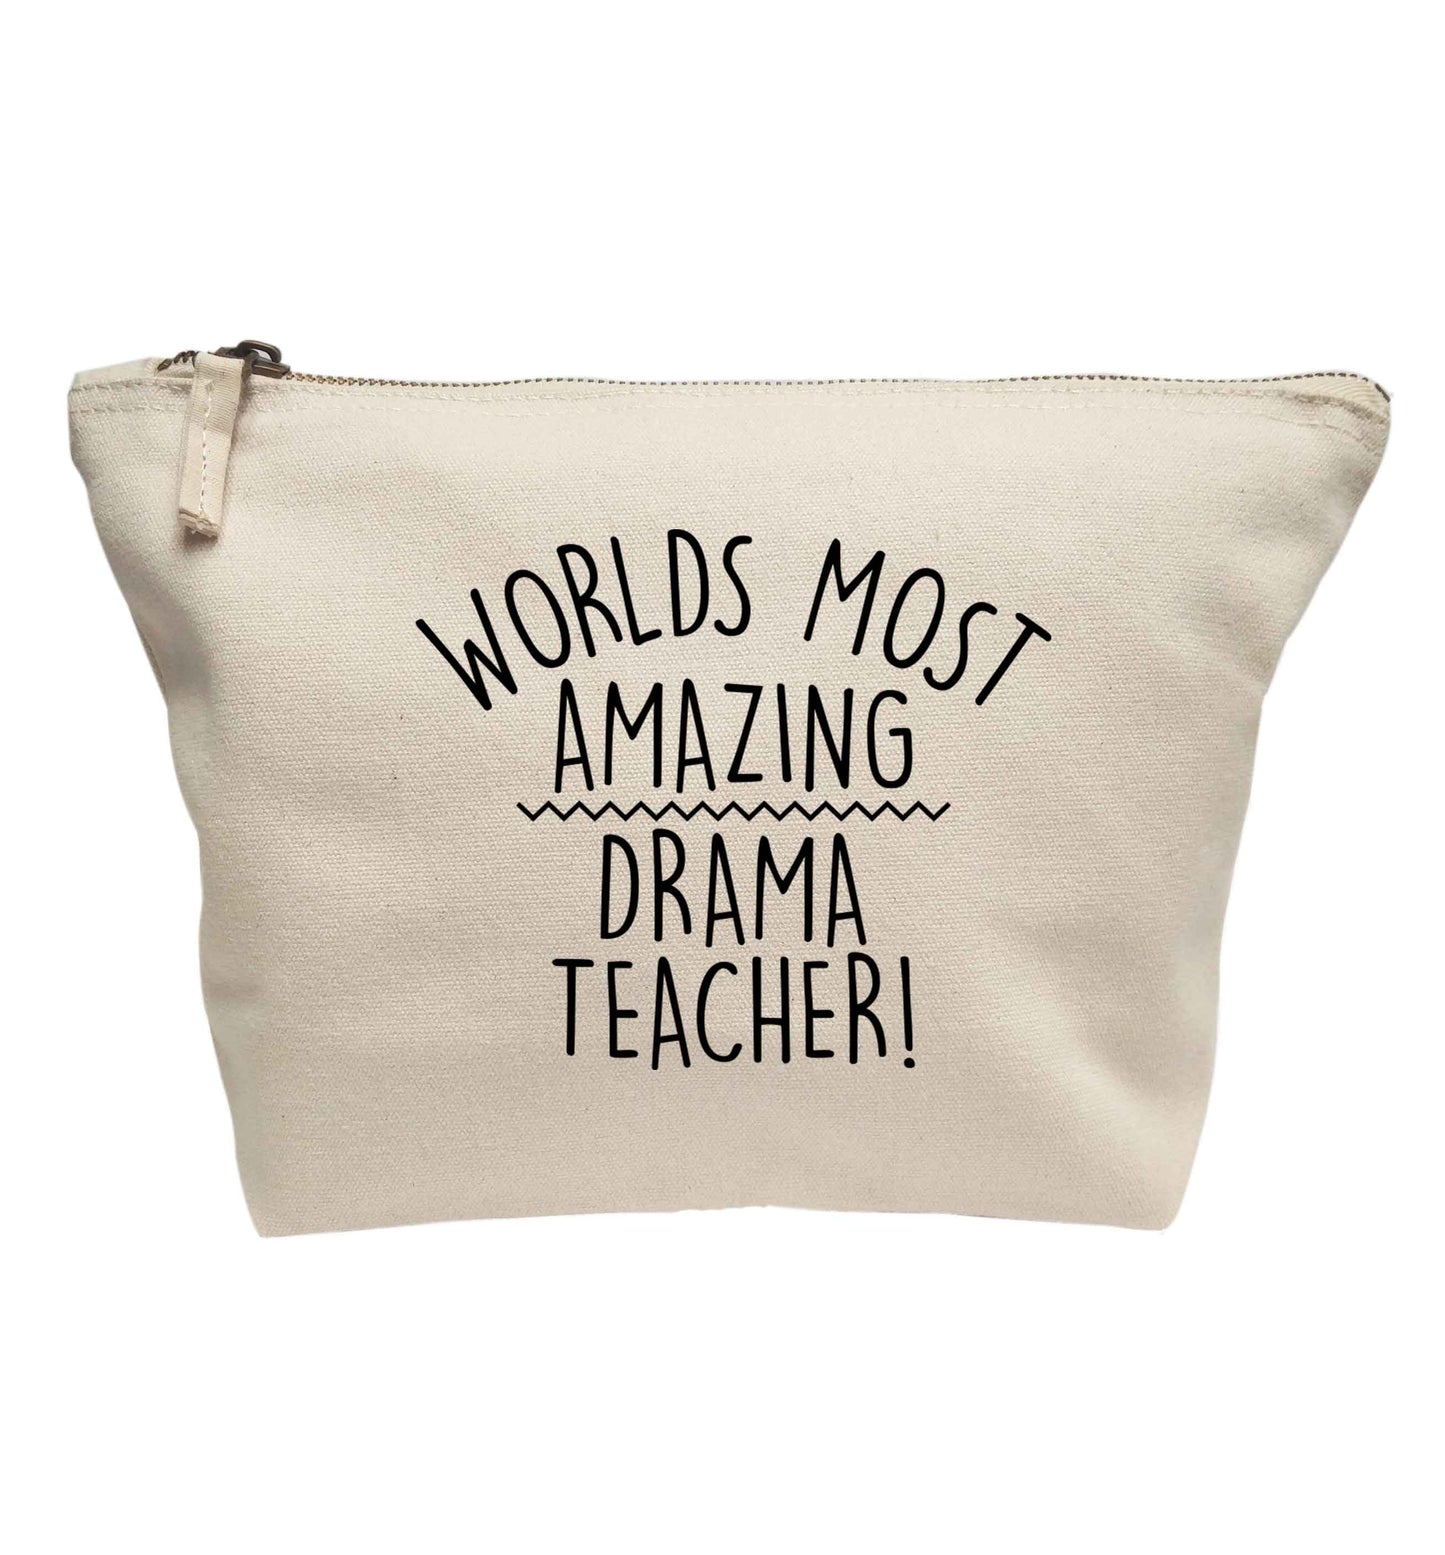 Worlds most amazing drama teacher | Makeup / wash bag